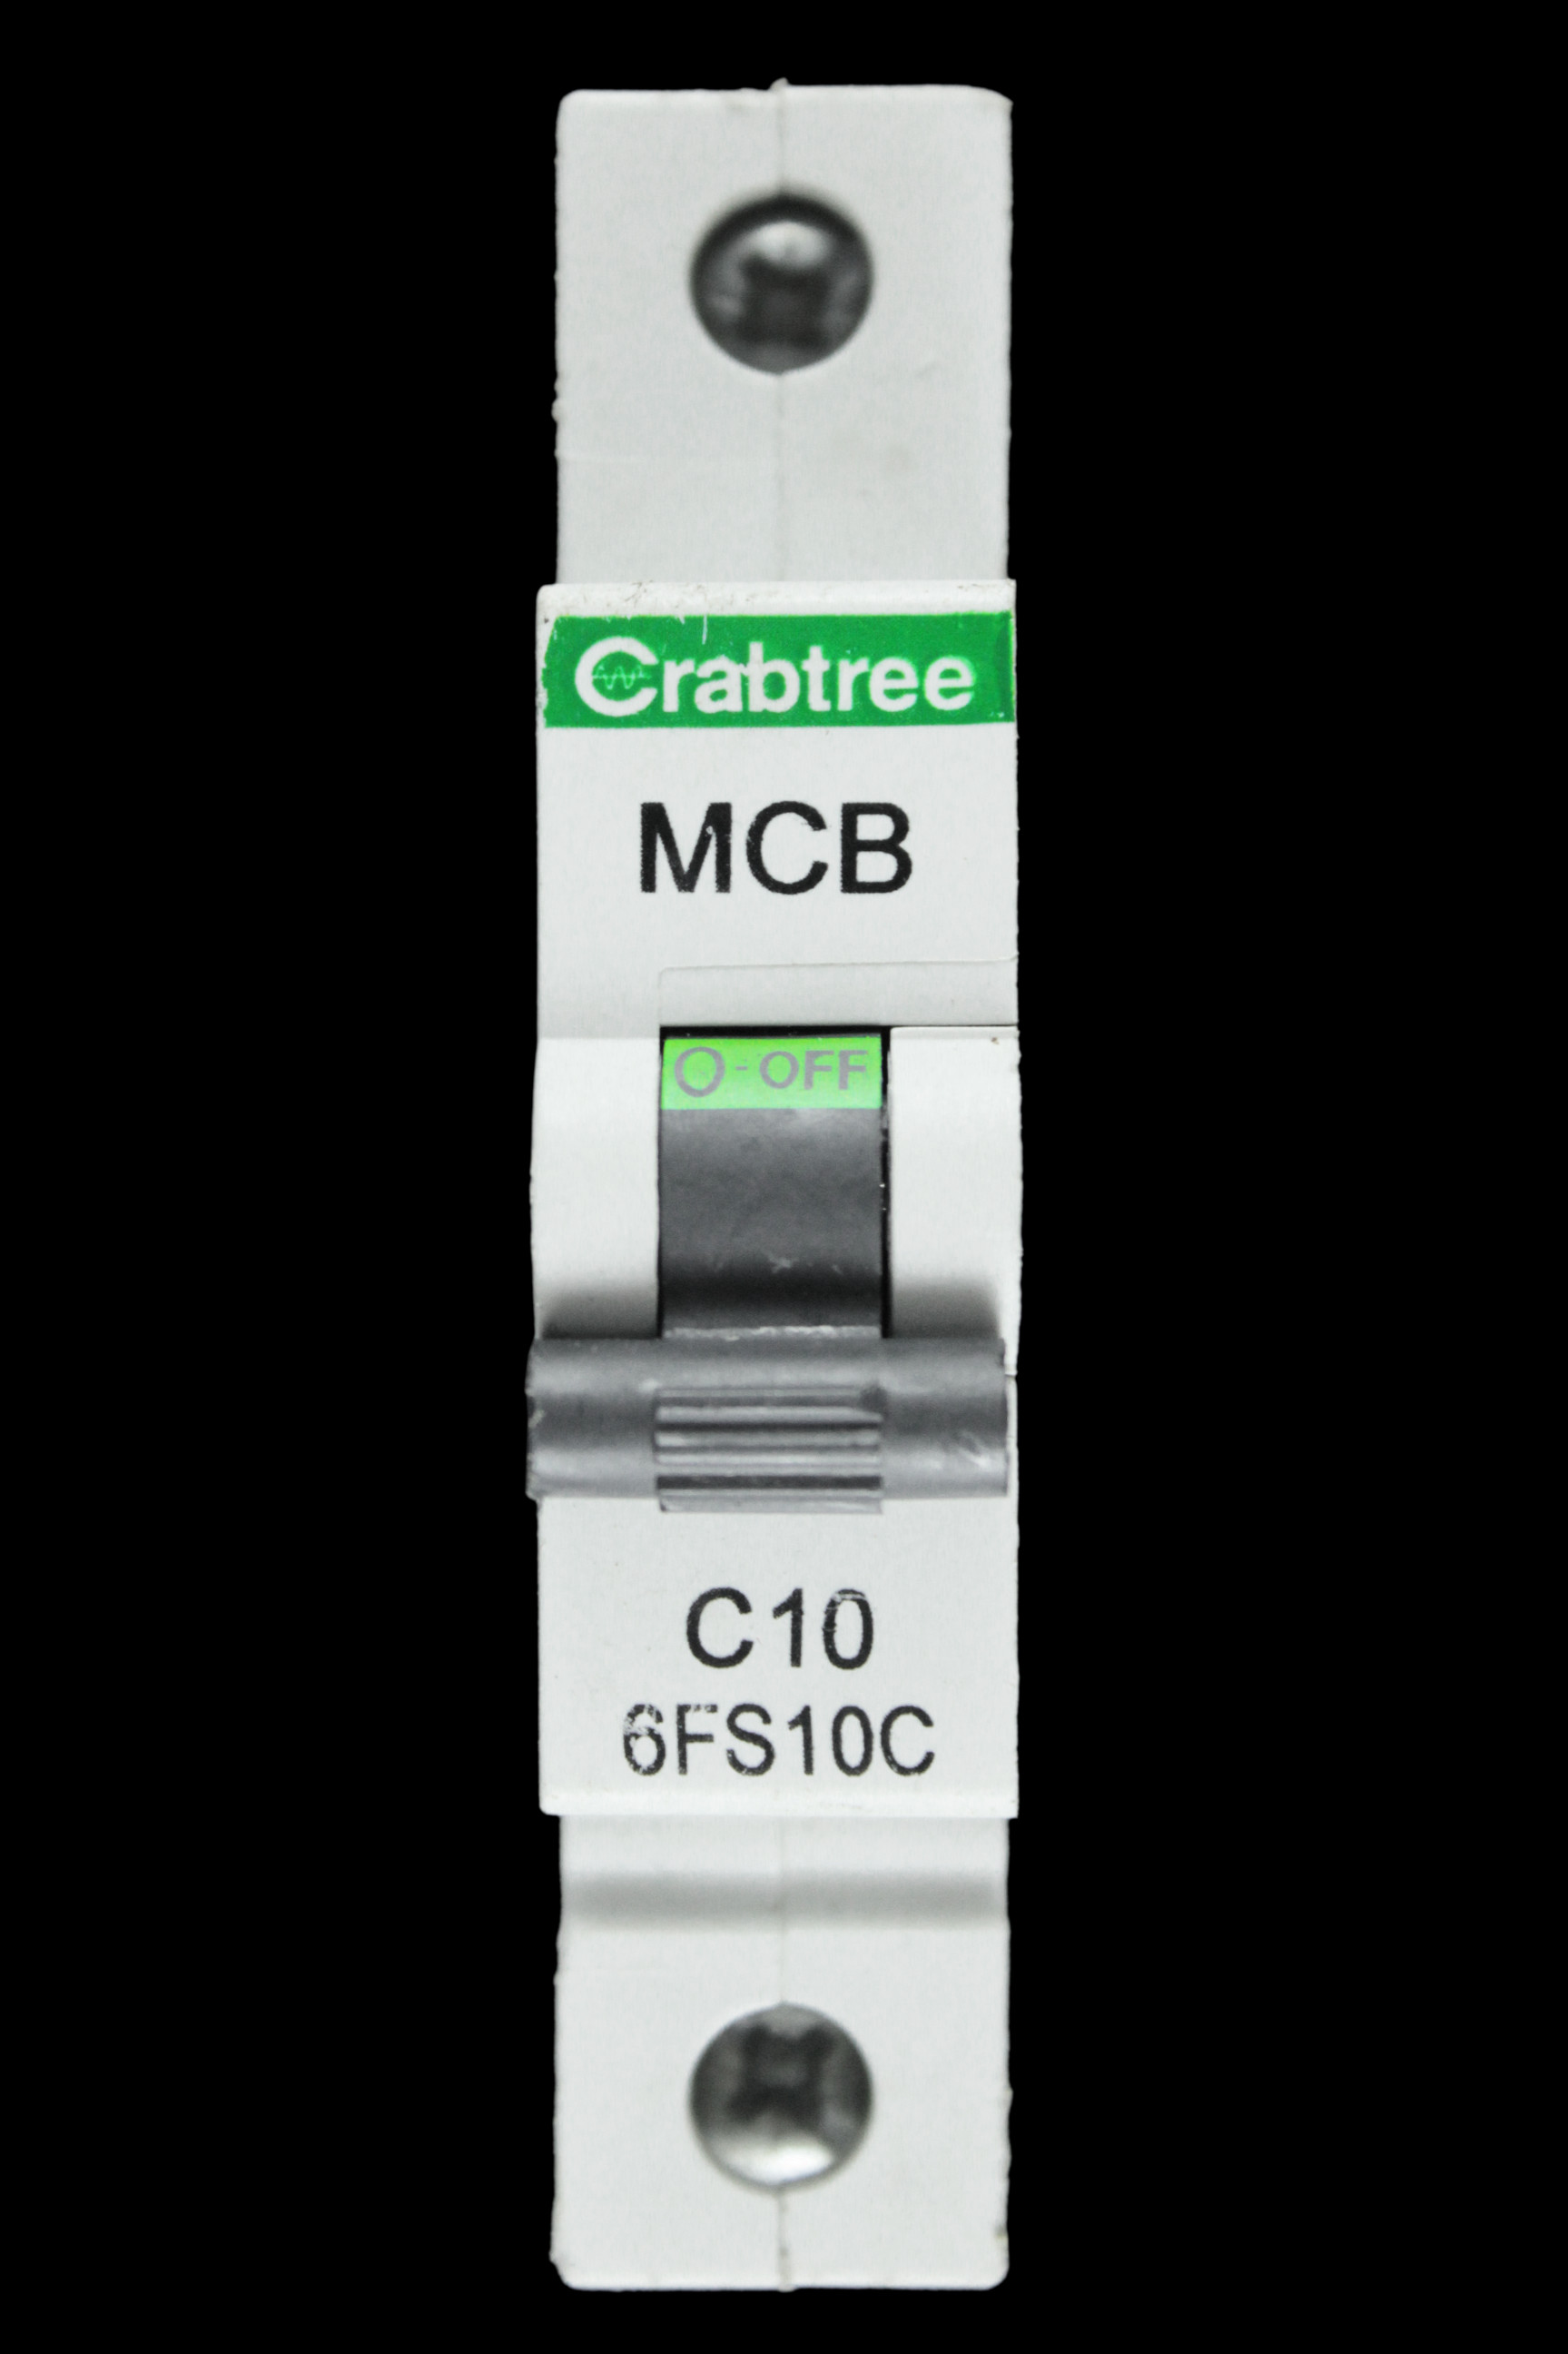 CRABTREE 10 AMP CURVE C 6kA MCB CIRCUIT BREAKER 6FS10C BC